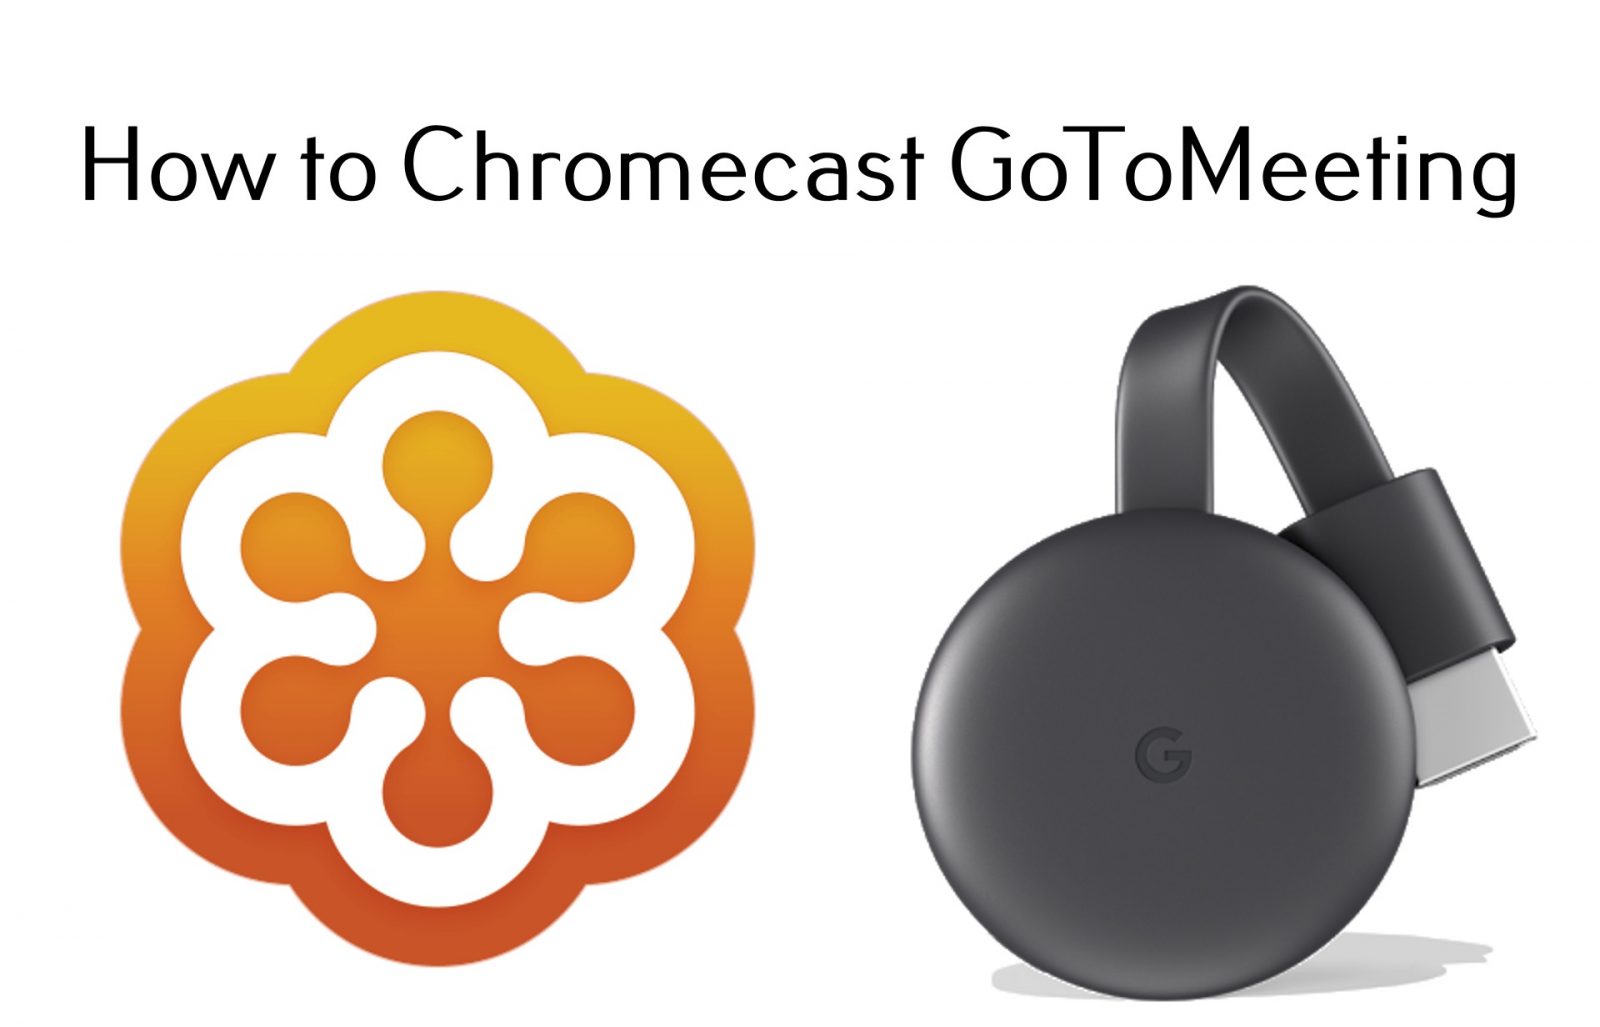 Chromecast GoToMeeting